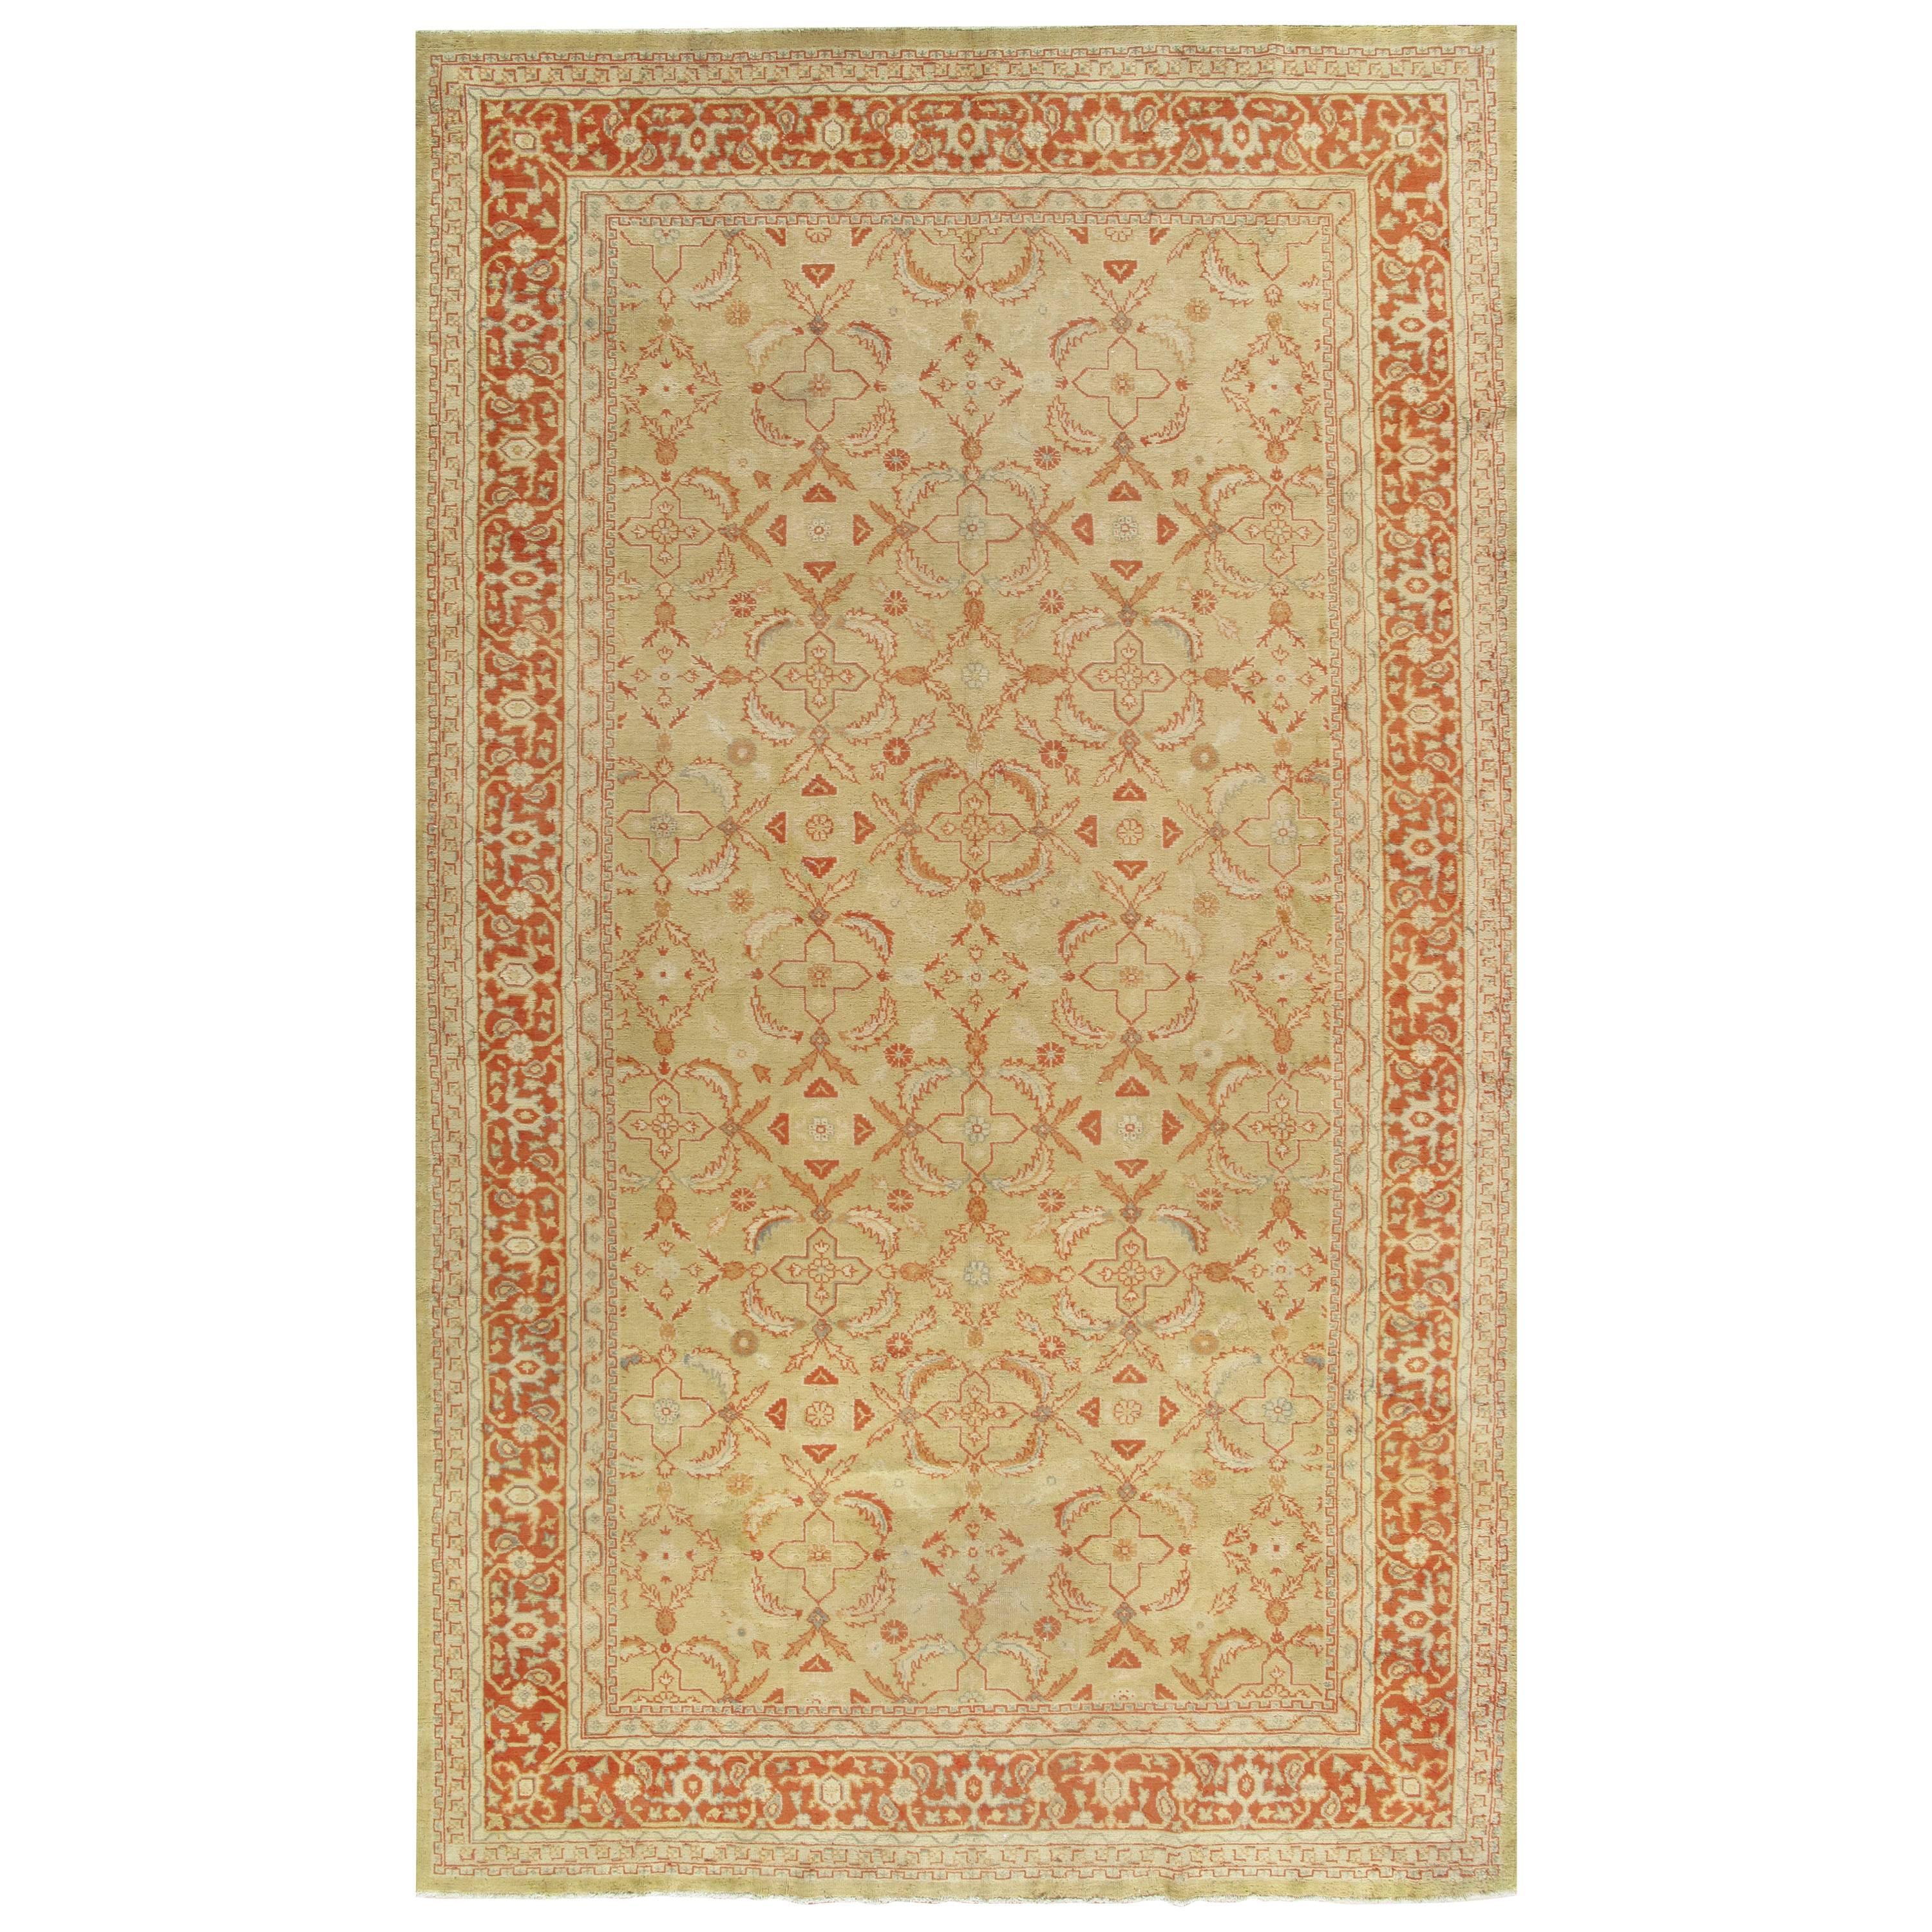 Antique Oushak Carpet Handmade Oriental Rug, Pale Green Coral, Taupe, Cream Fine